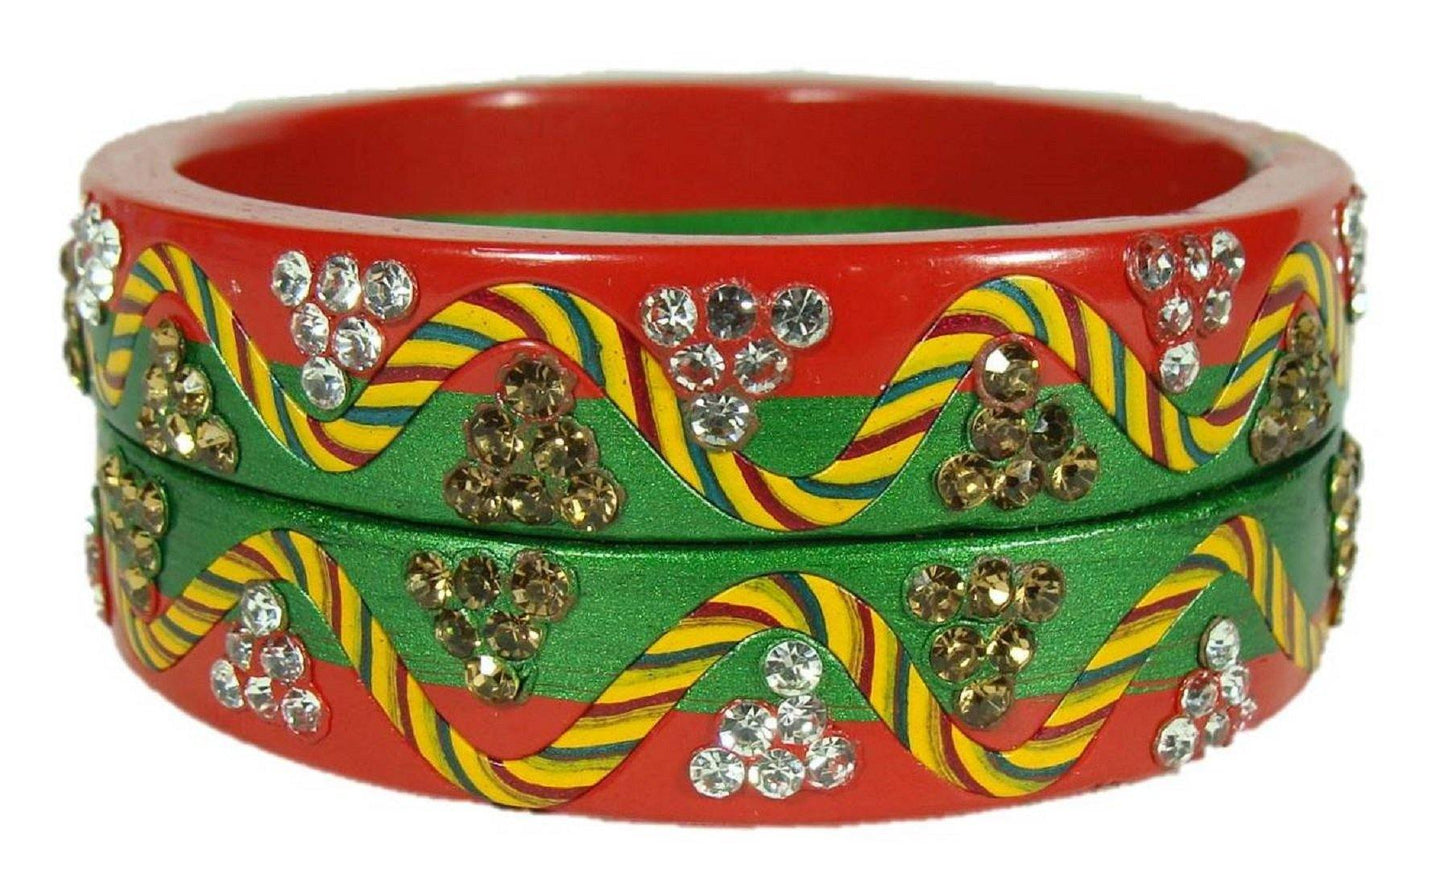 sukriti rajasthani lahariya red-green lac bangles for women - set of 2